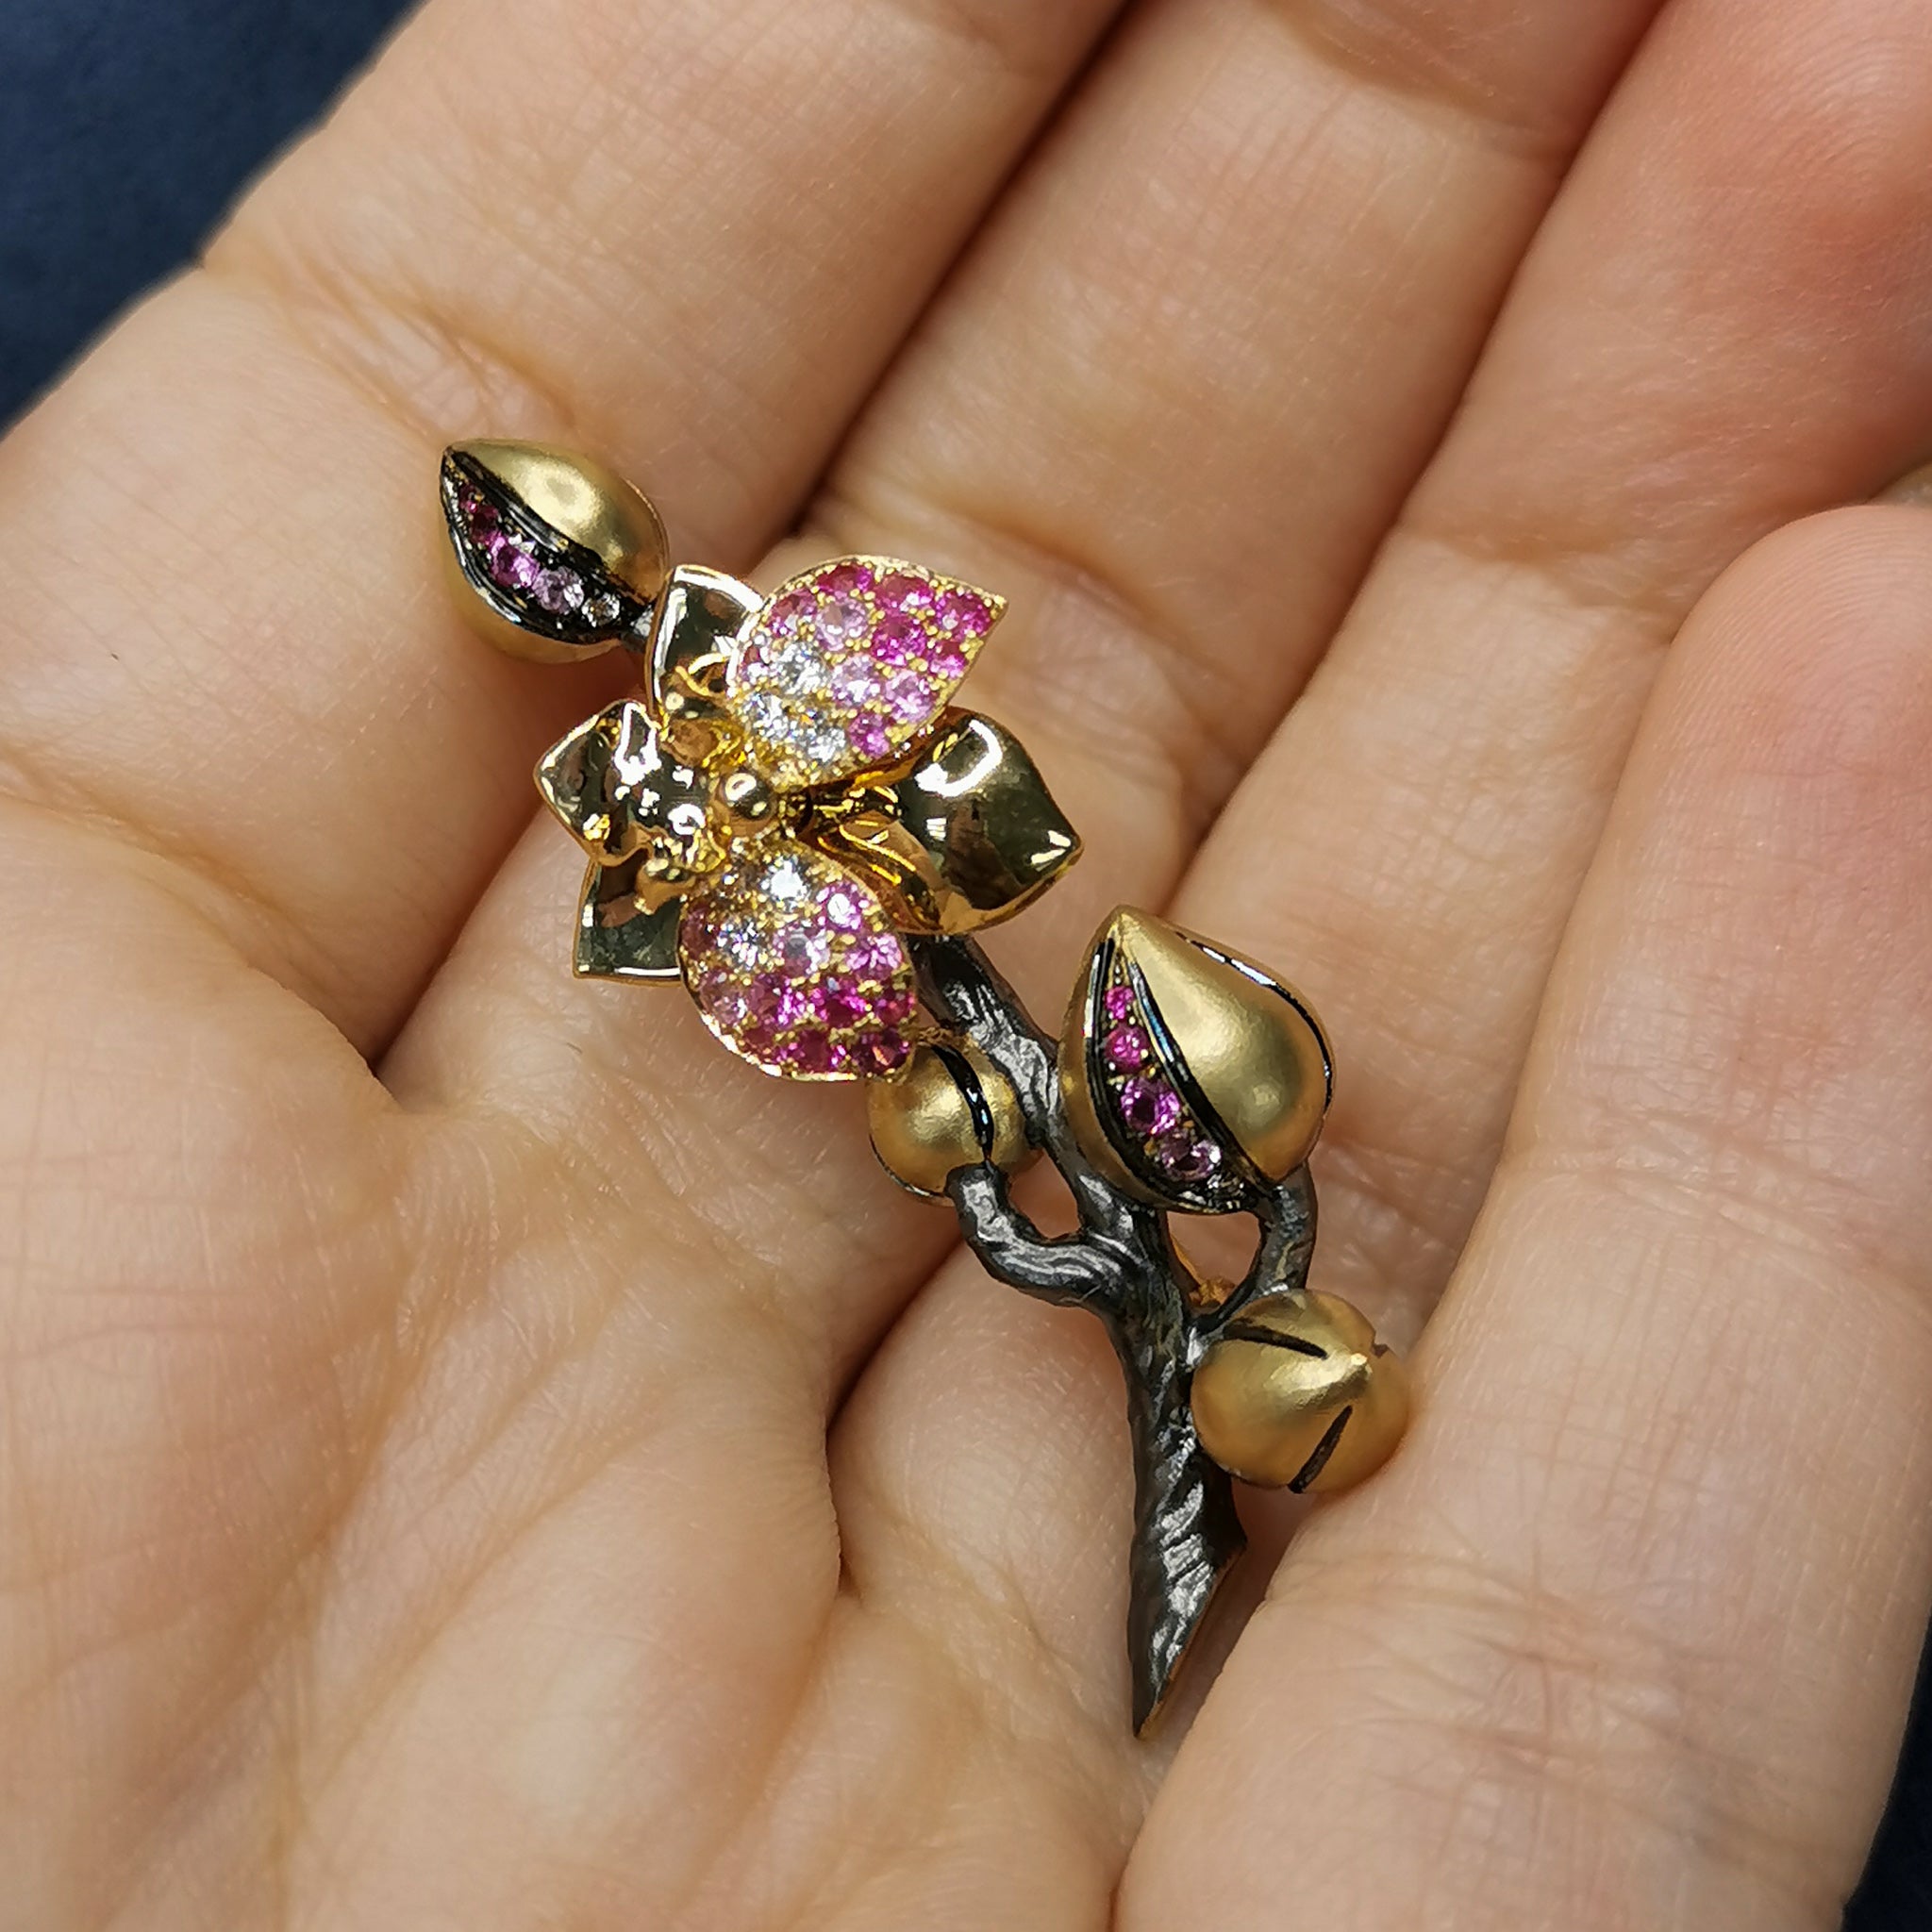 Brs 0275-21, 18K Yellow Gold, Pink Sapphires, Diamonds Brooch